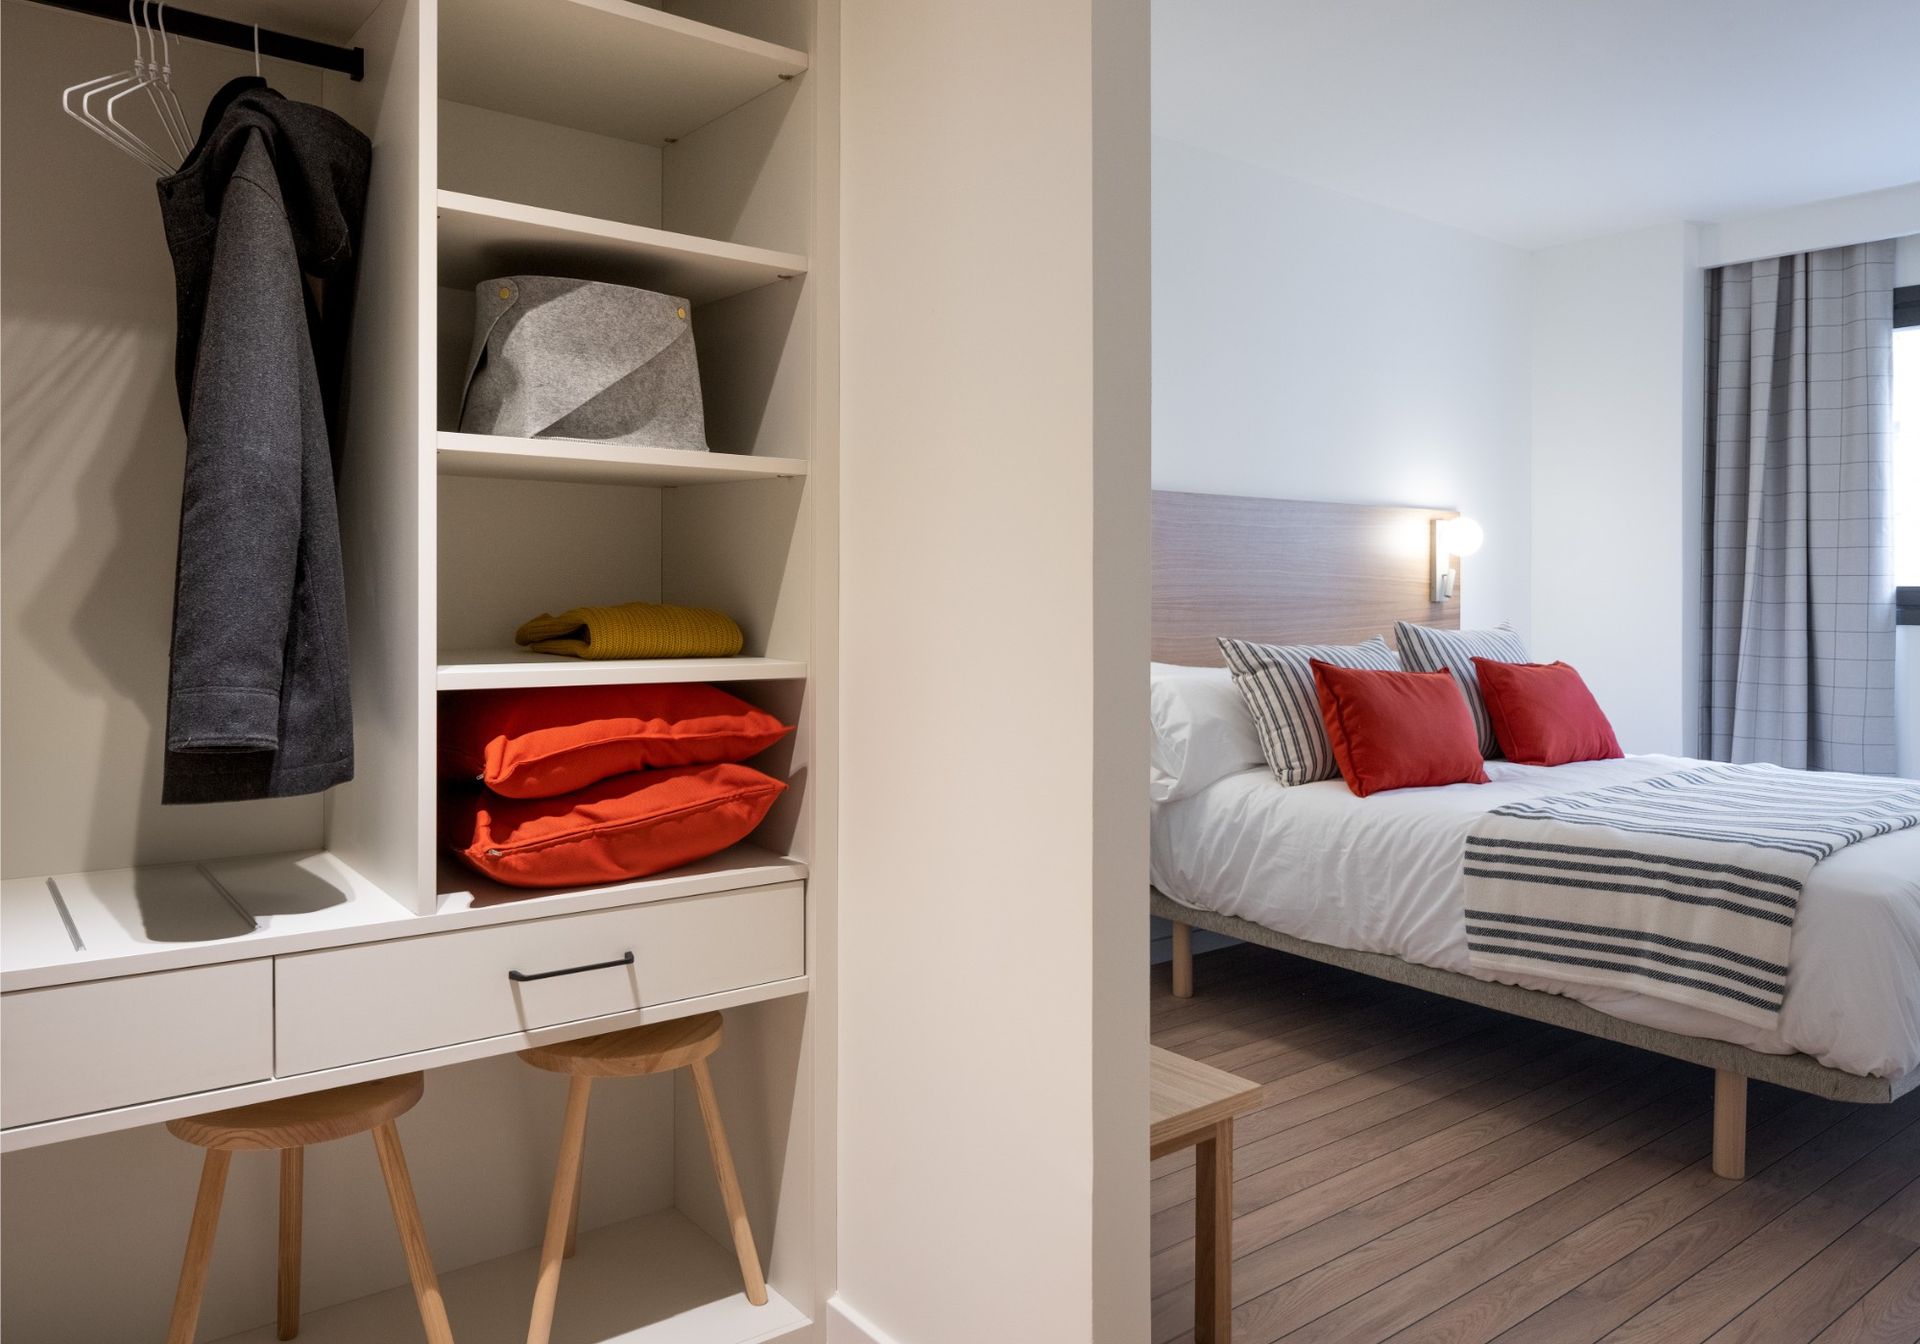 Two bedroom apartment in Vitoria city centre